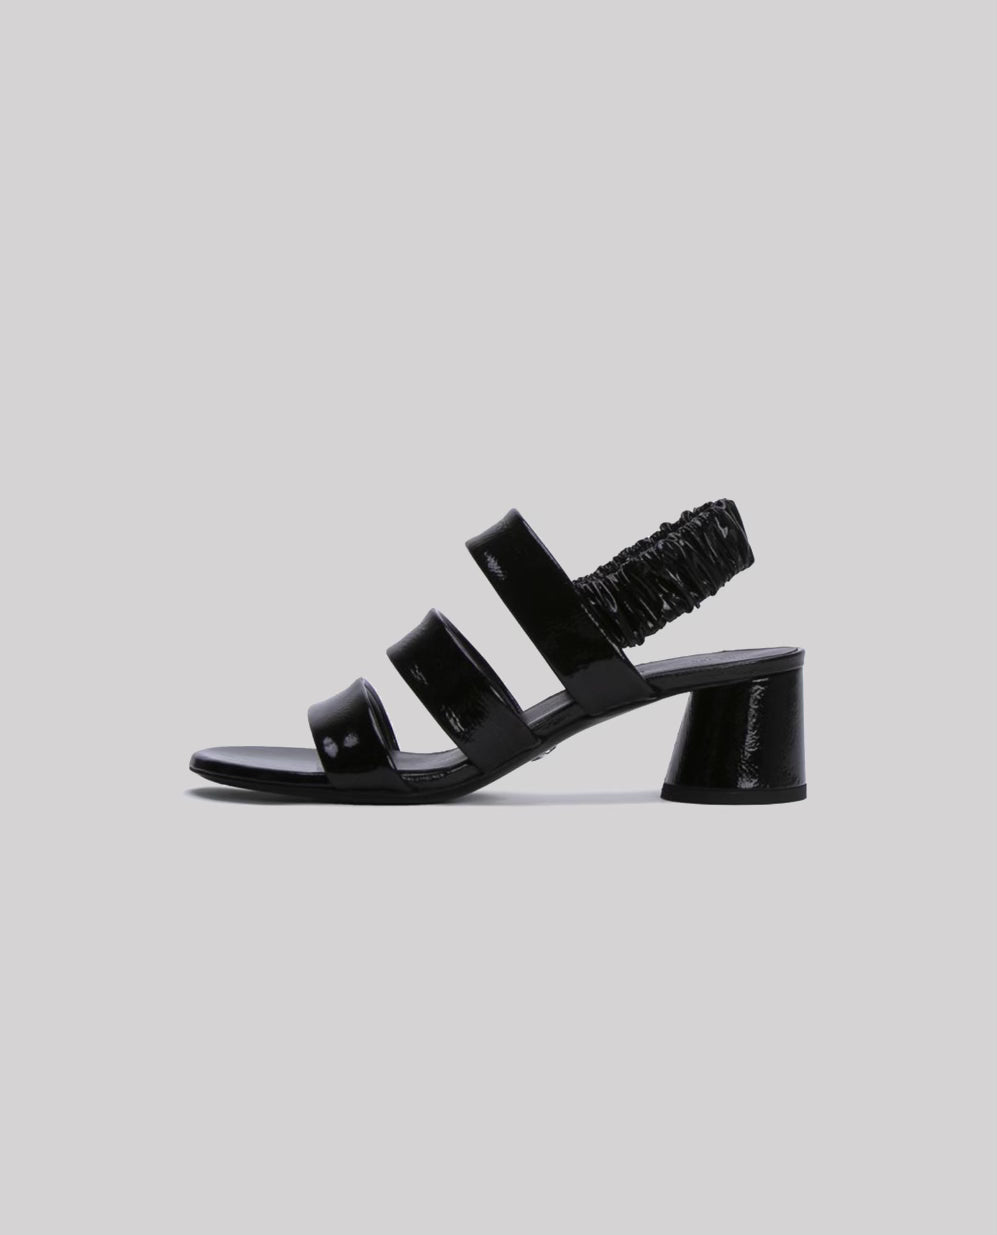 Proenza Schouler Black Patent Sandals